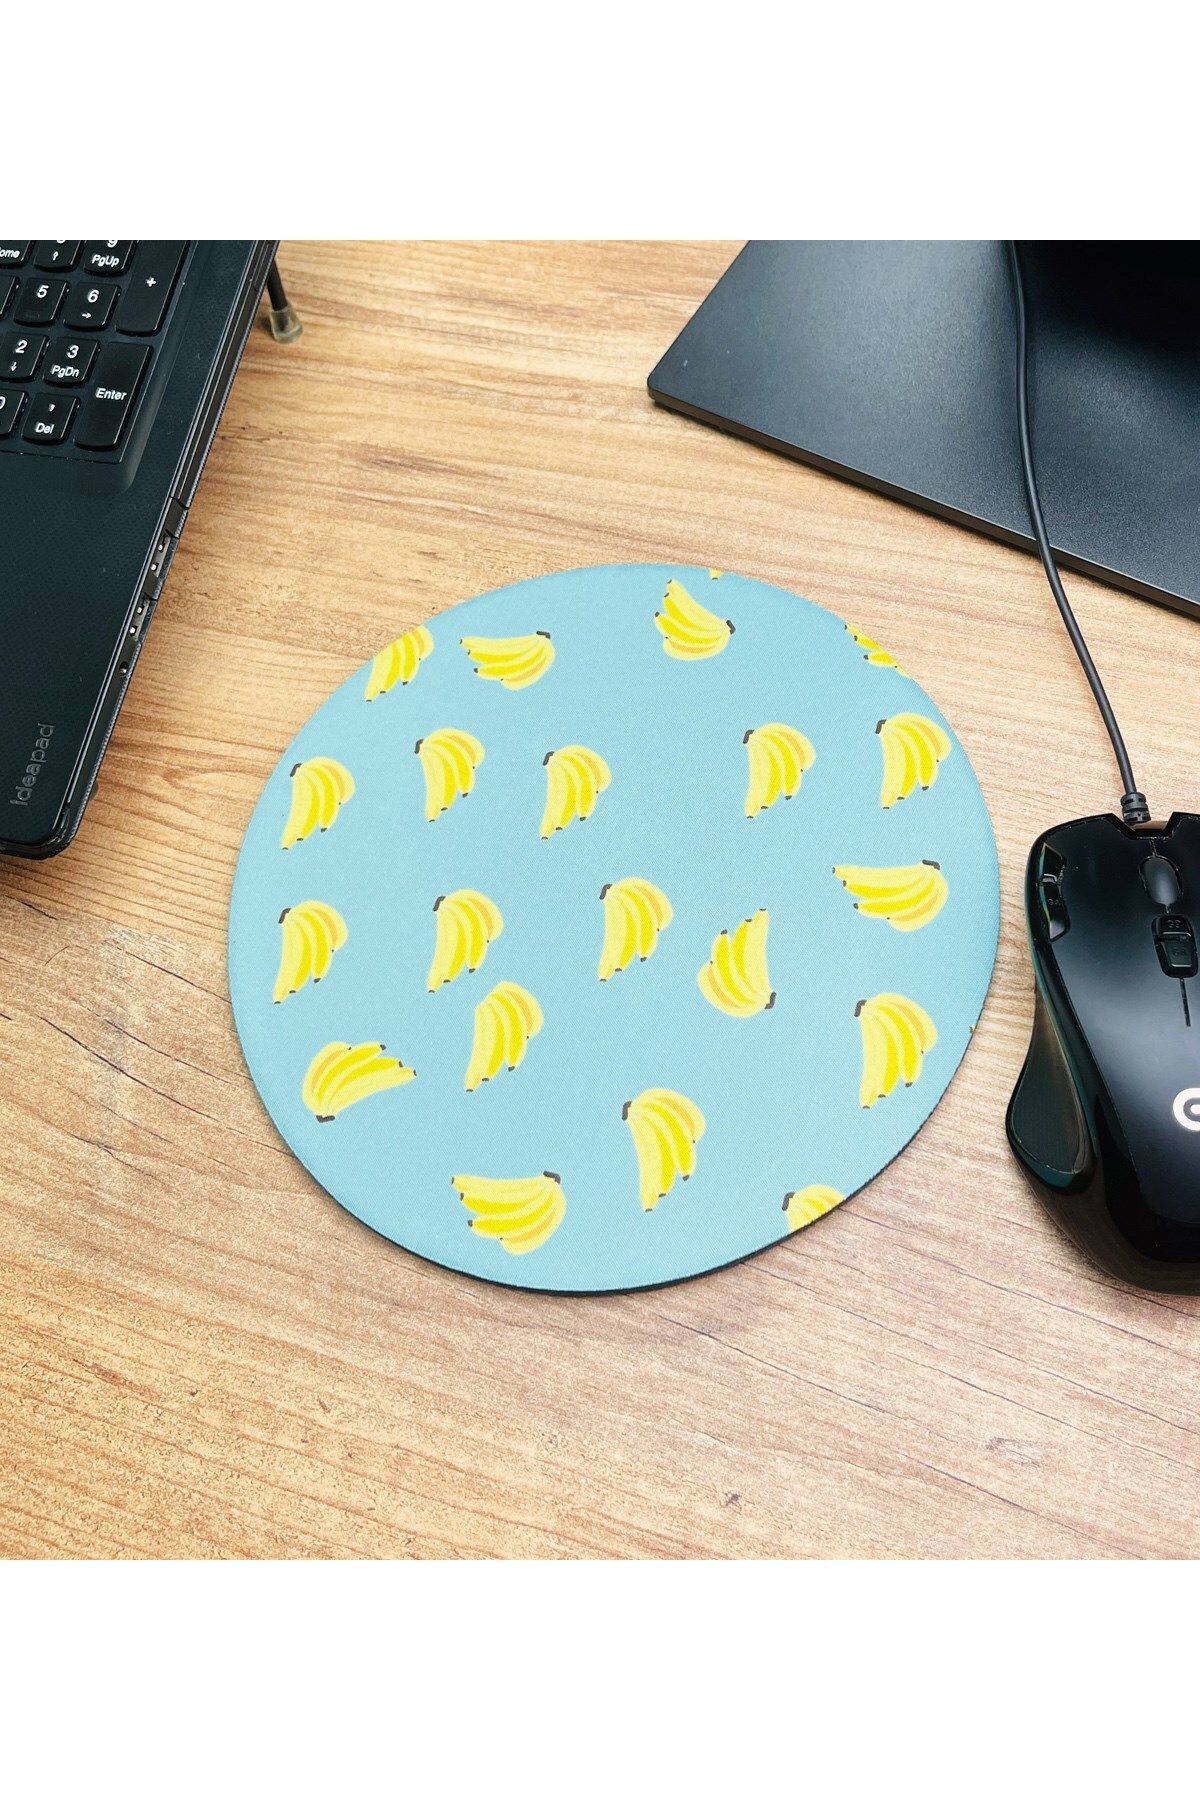 Gift Moda Muz Tasarımlı Oval Mouse Pad